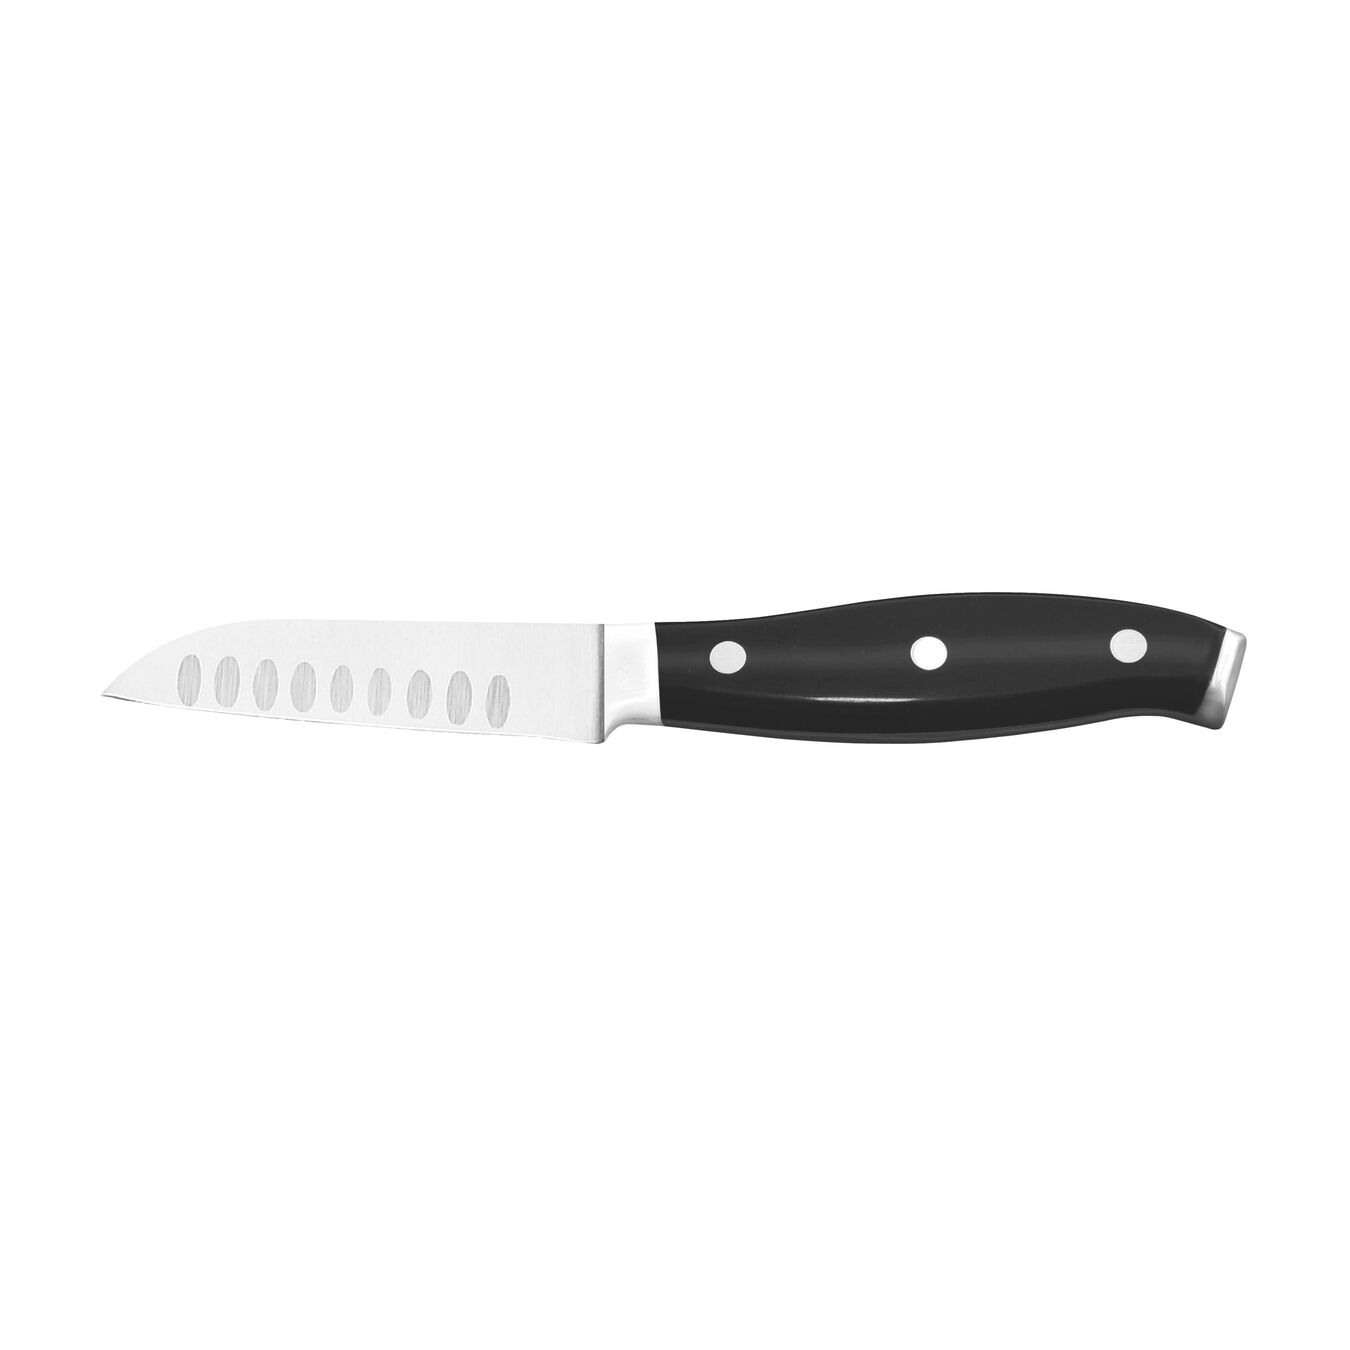 3-inch, Kudamono Paring Knife,,large 1